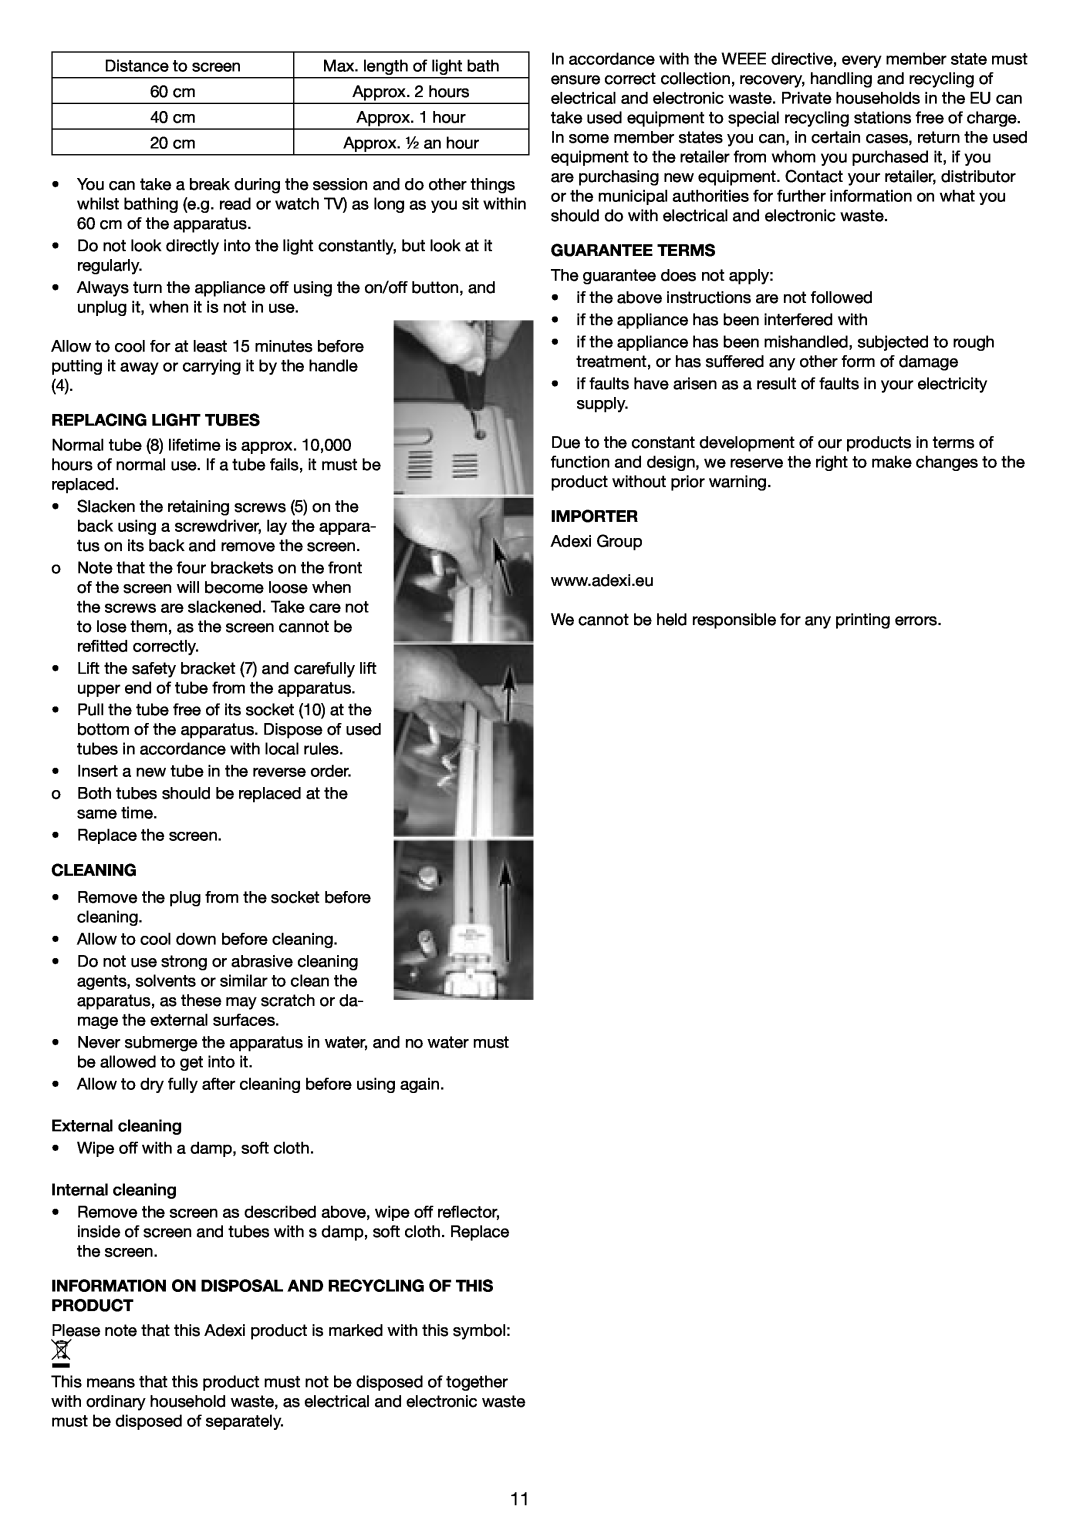 Melissa 637-001 manual Replacing Light Tubes, Cleaning, Guarantee Terms, Importer 